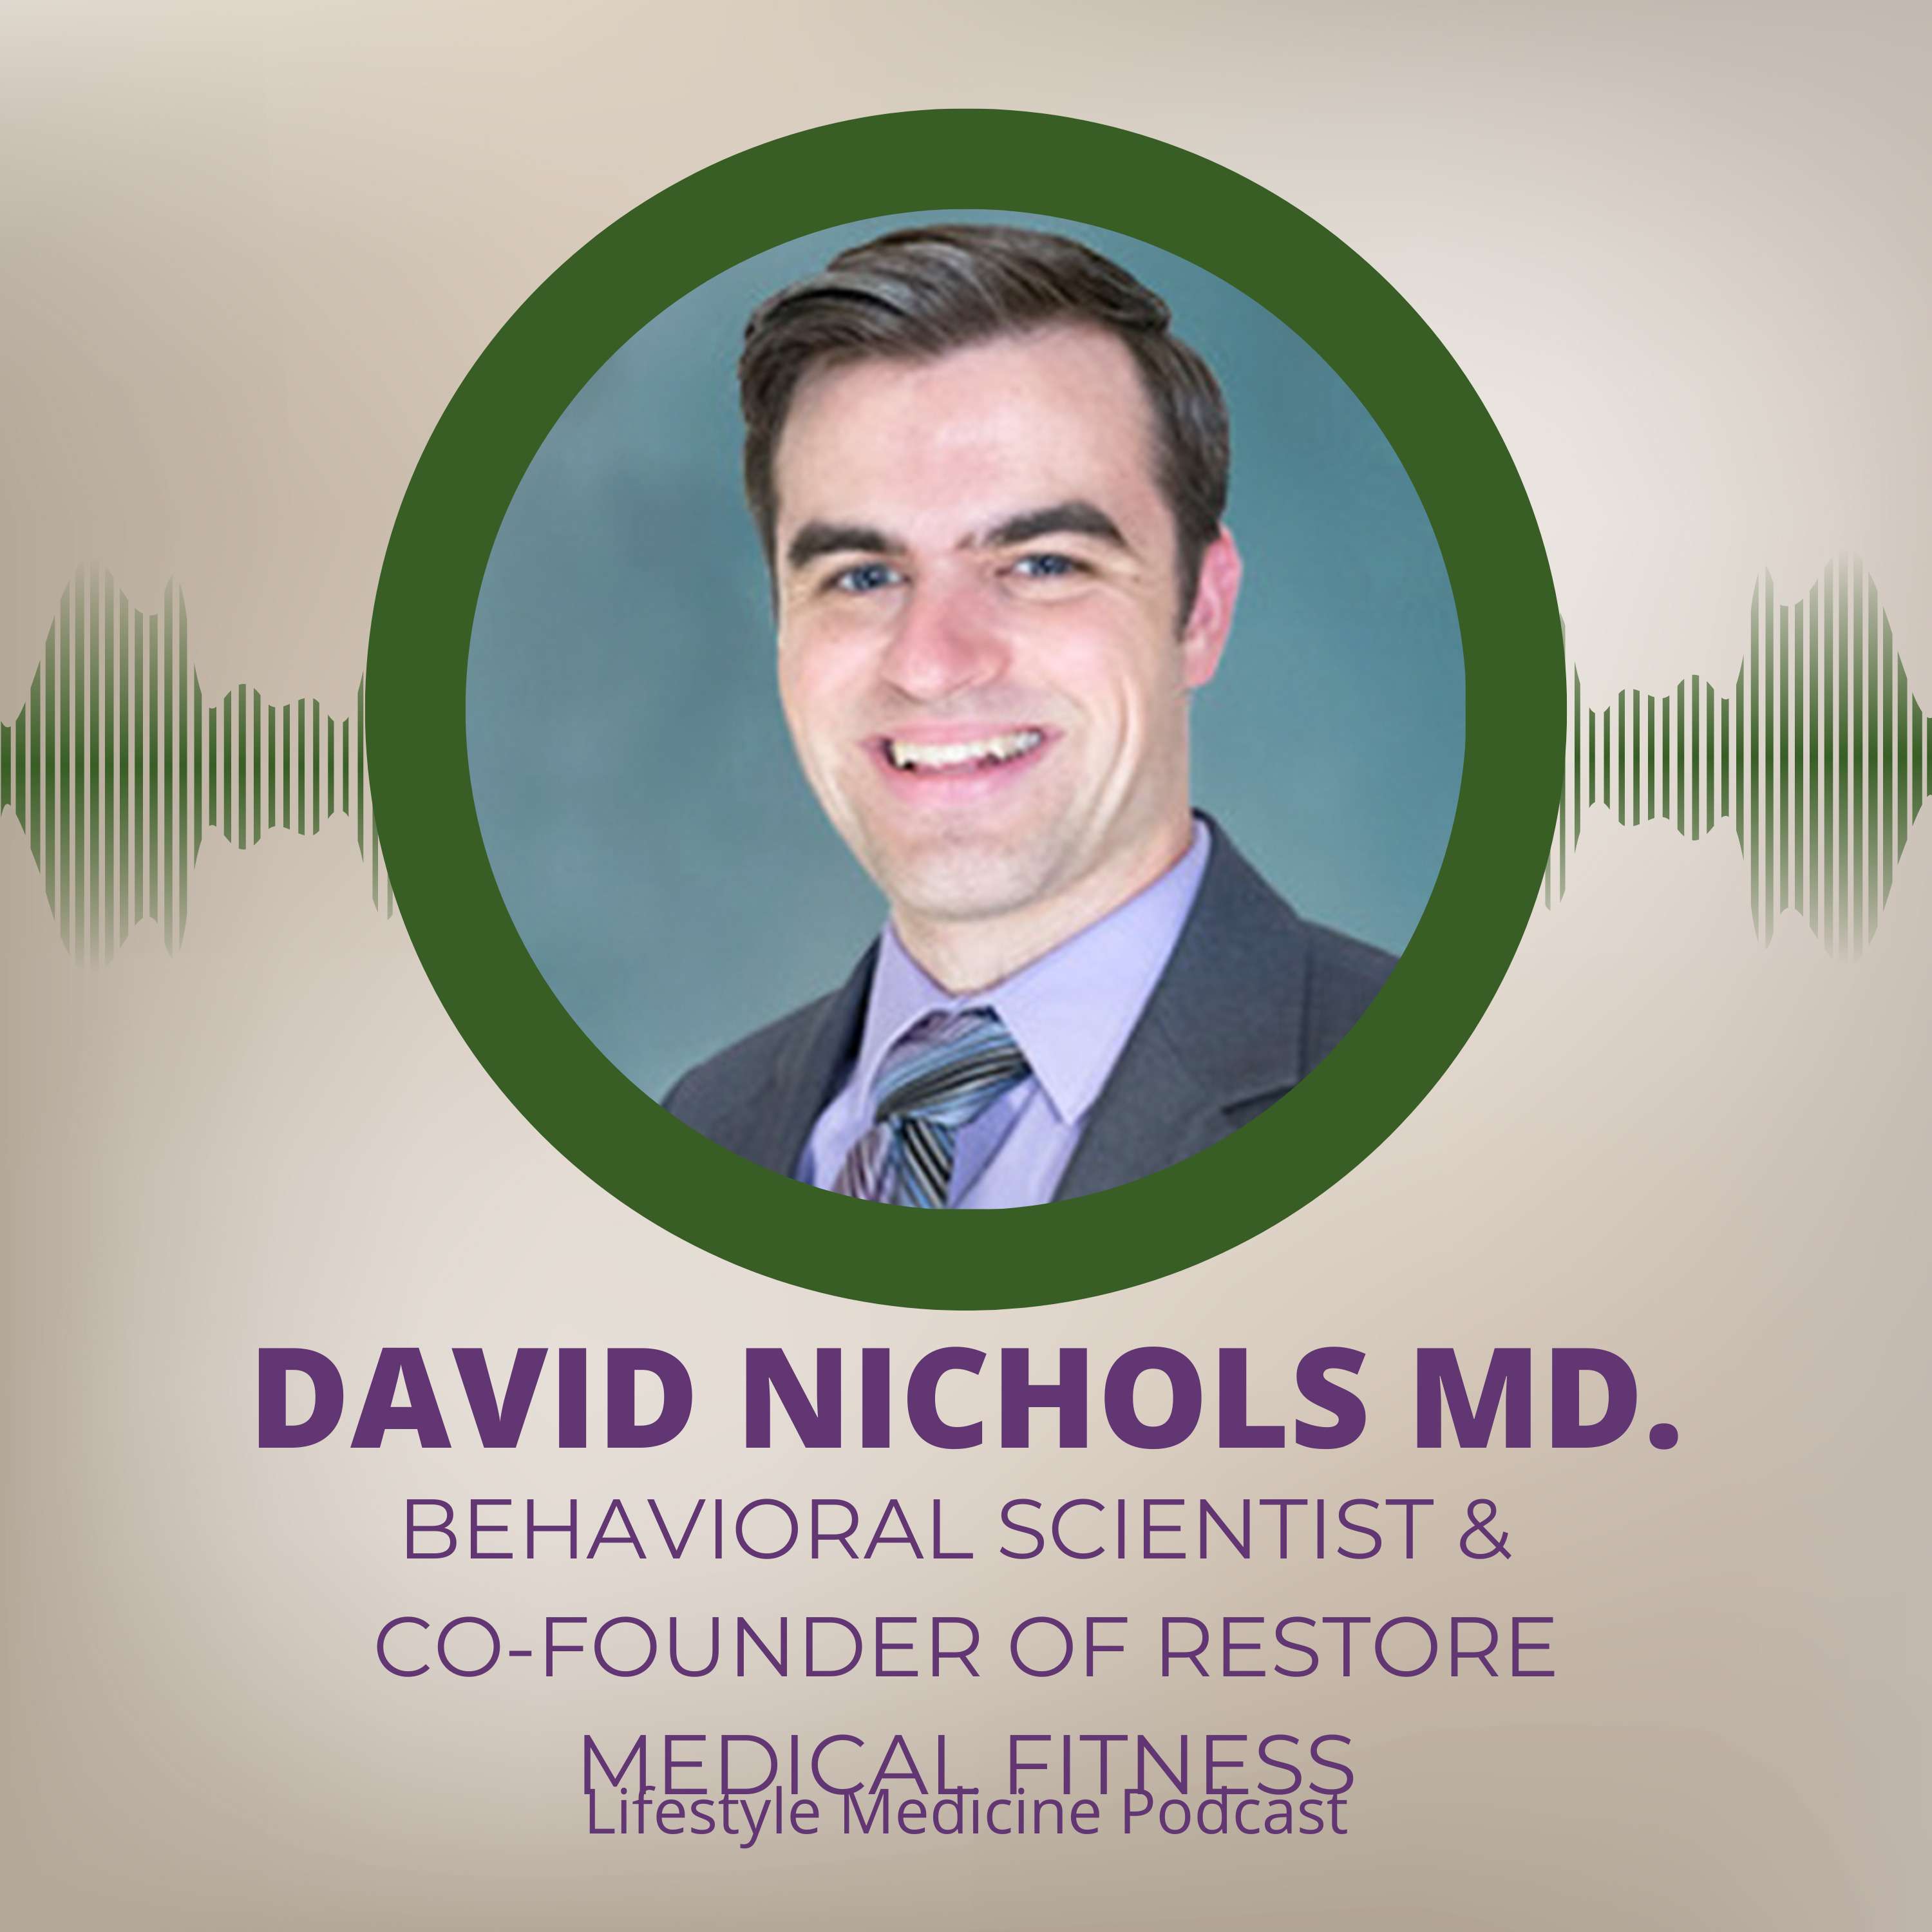 David Nichols MD. | Behavioral Scientist & Co-Founder of Restore Medical Fitness